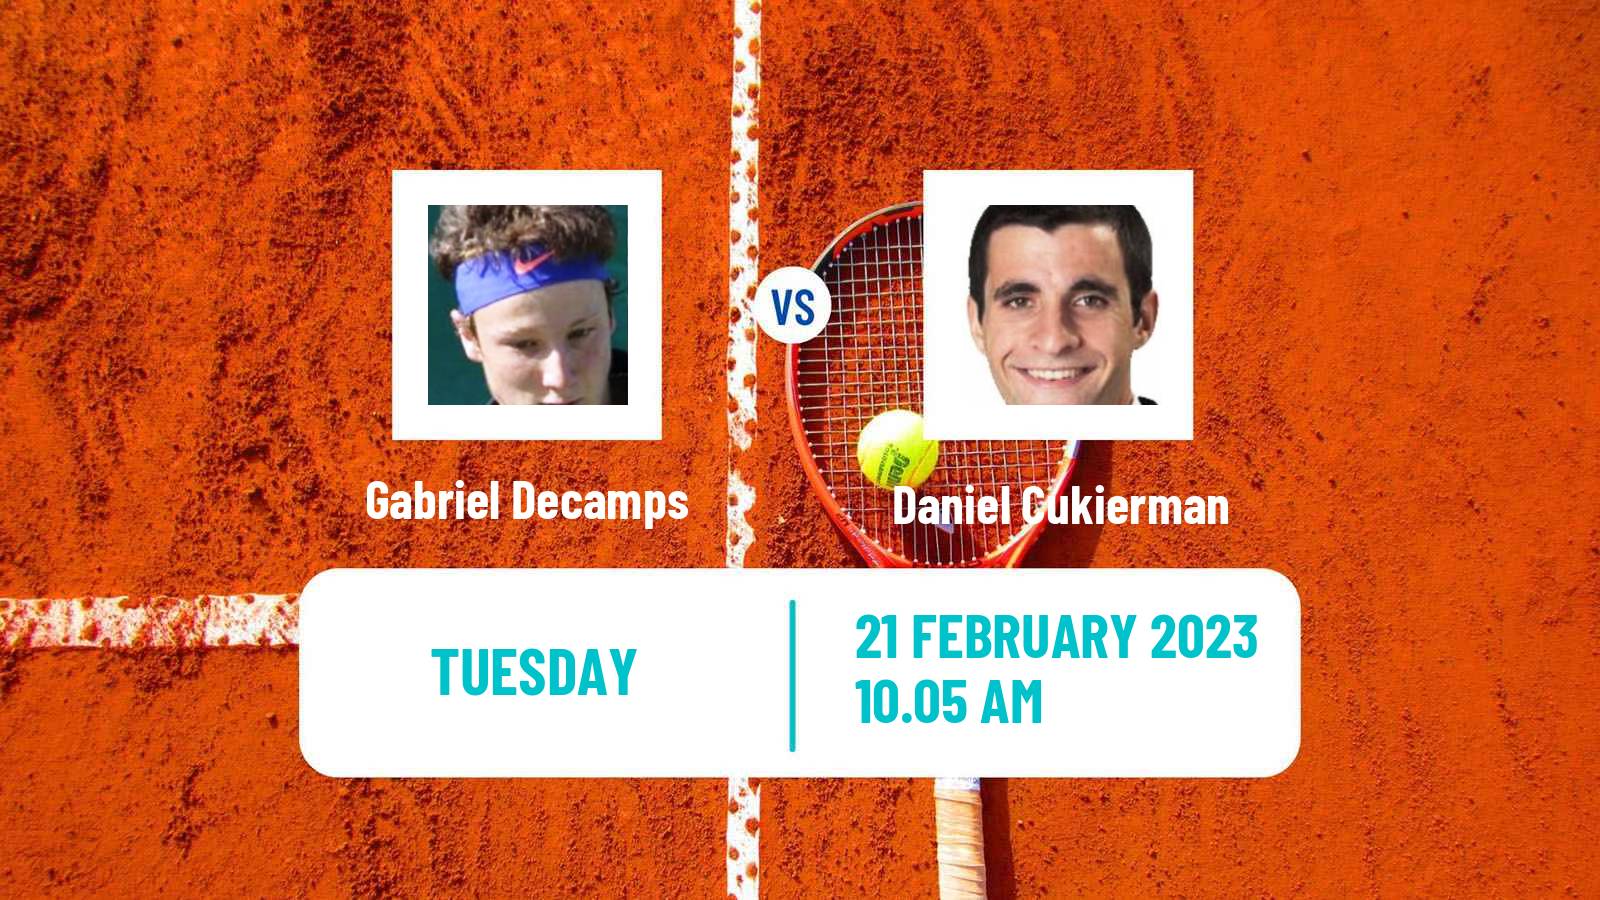 Tennis ATP Challenger Gabriel Decamps - Daniel Cukierman